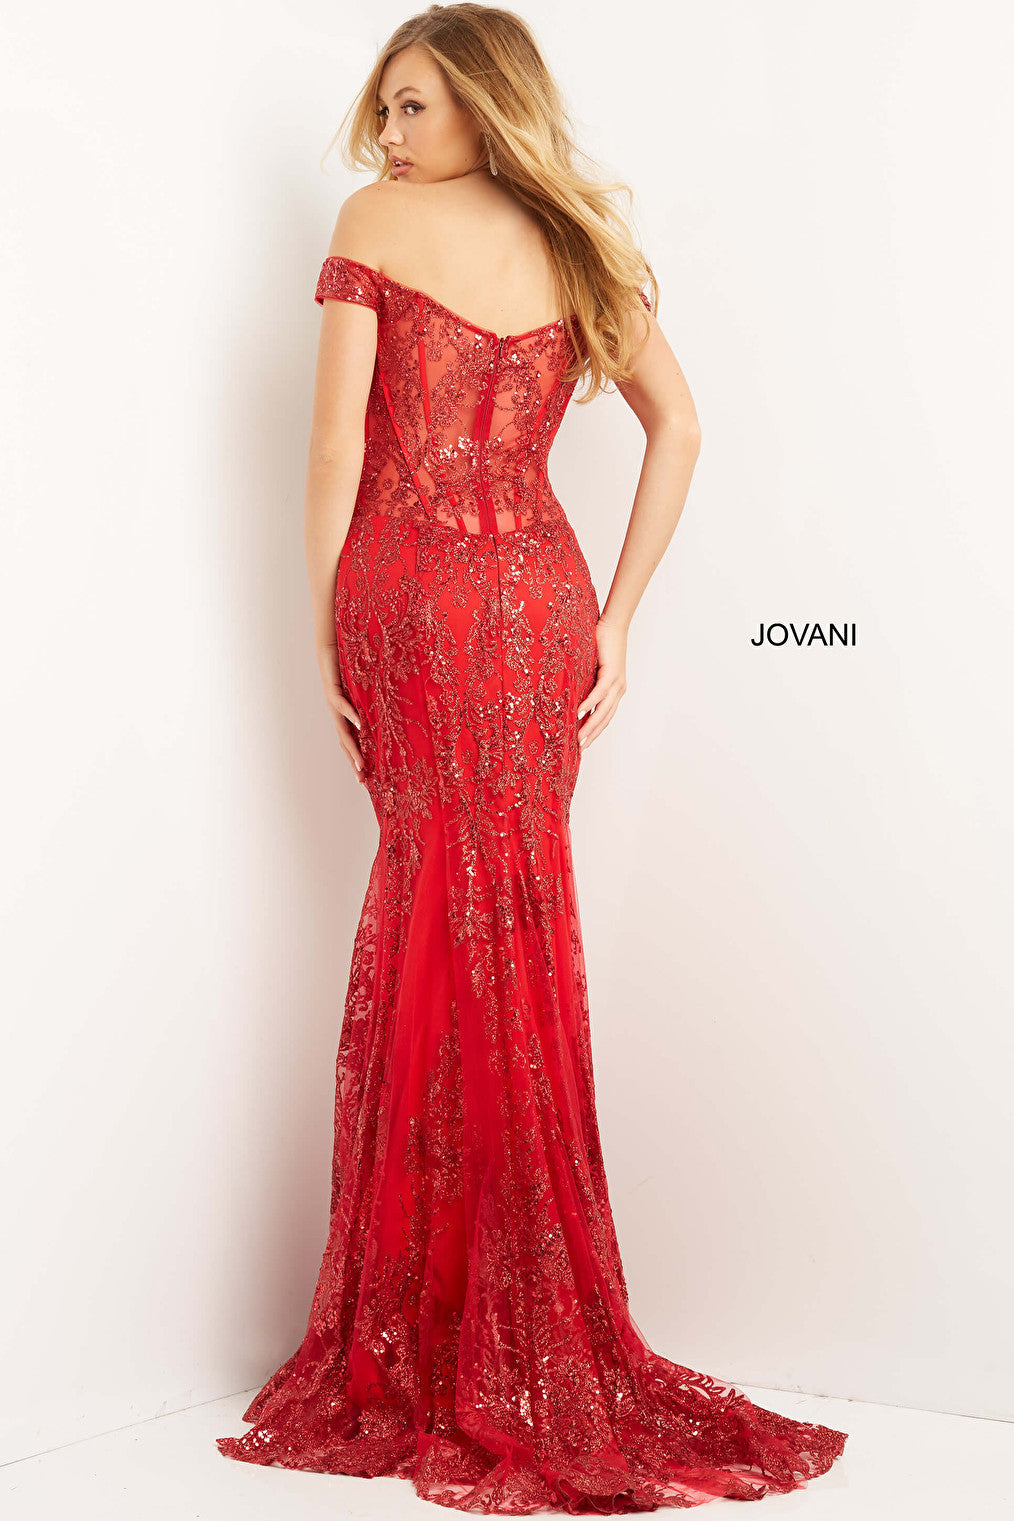 Jovani red prom dress 06369